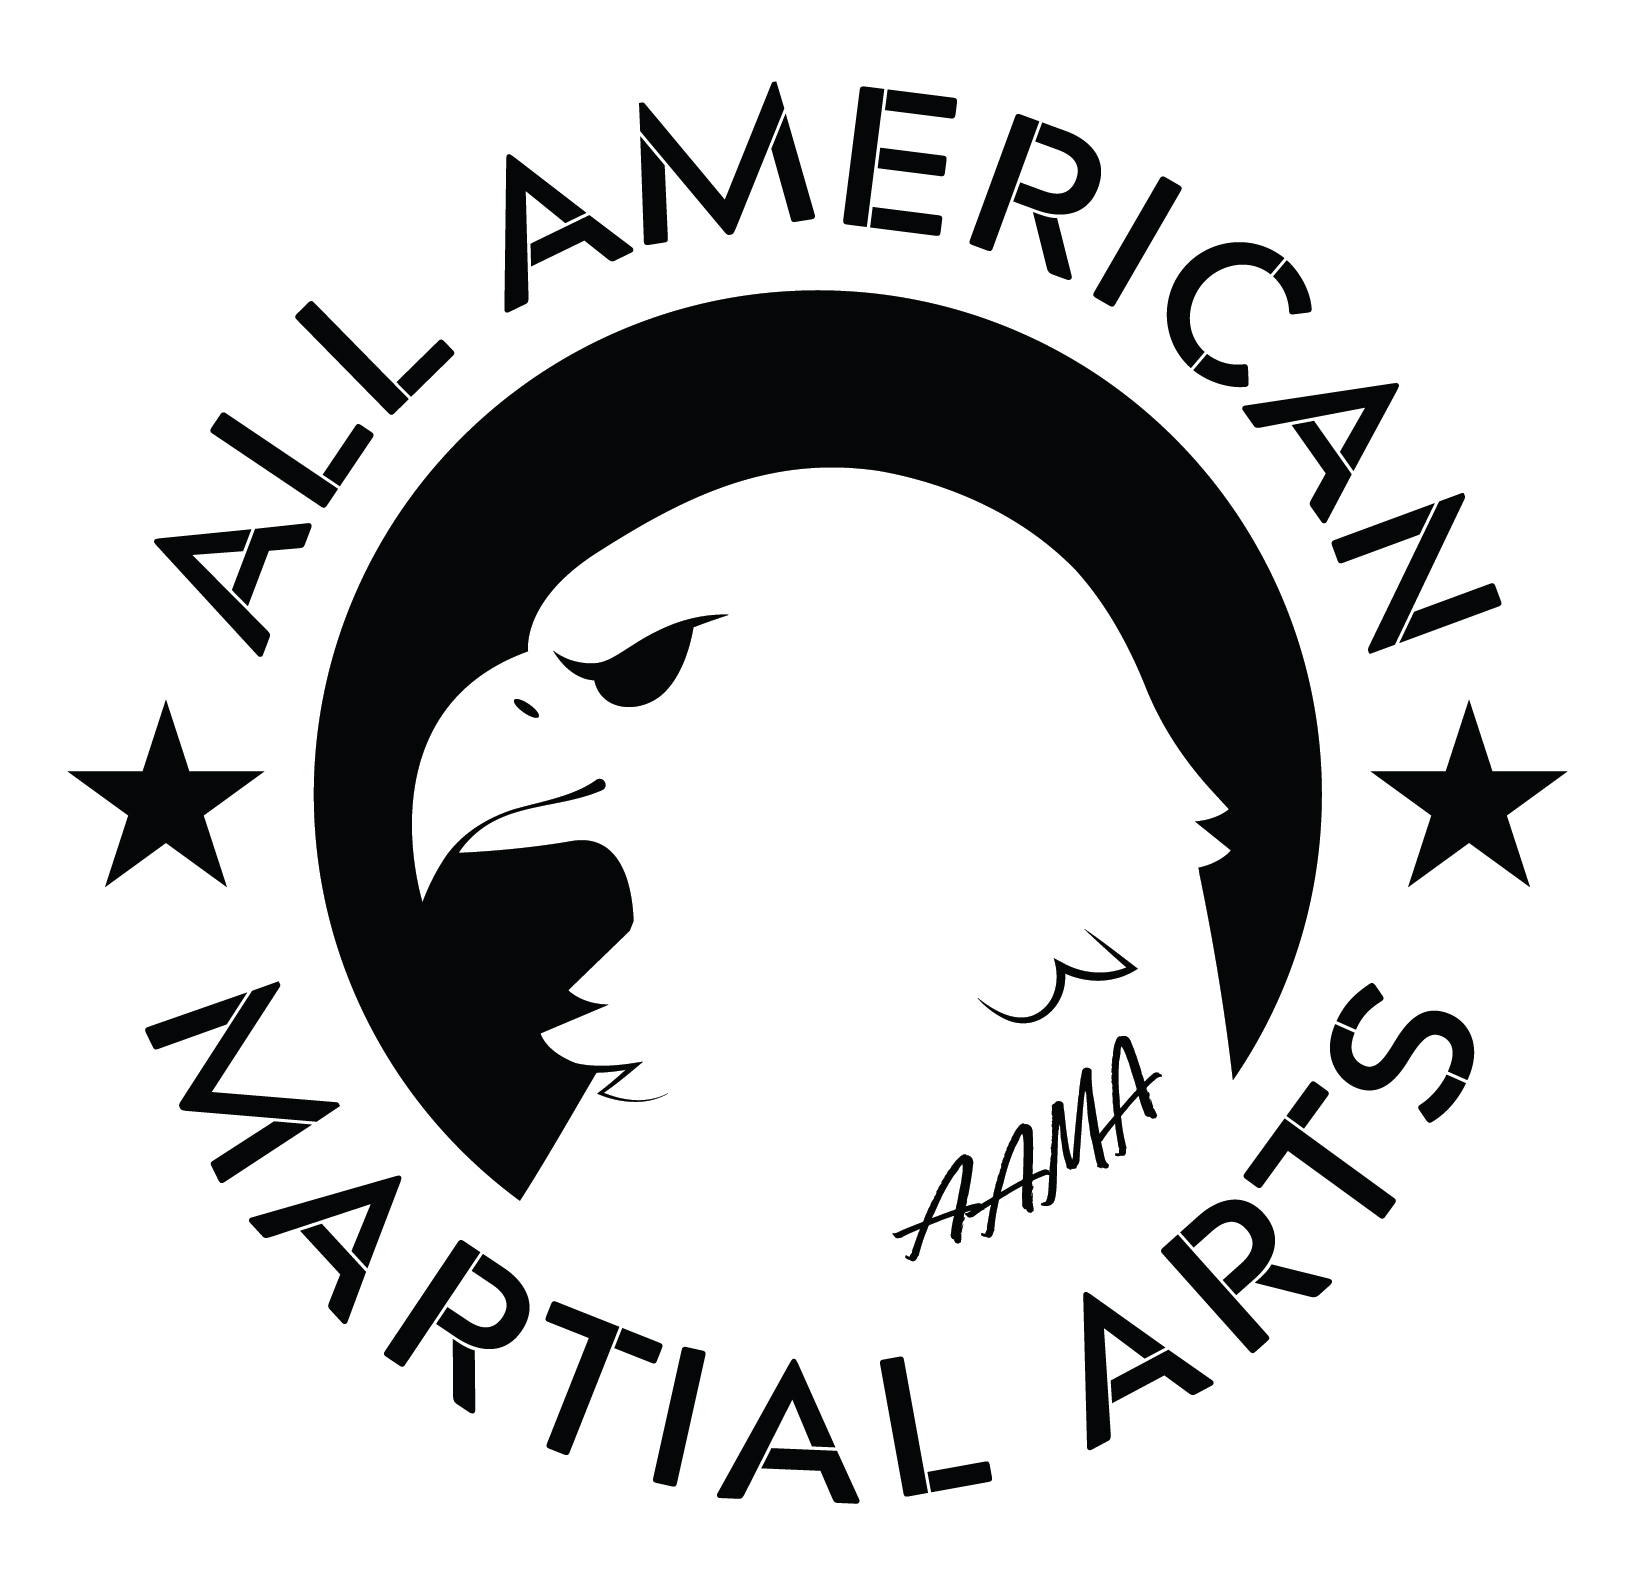 All American Martial Arts